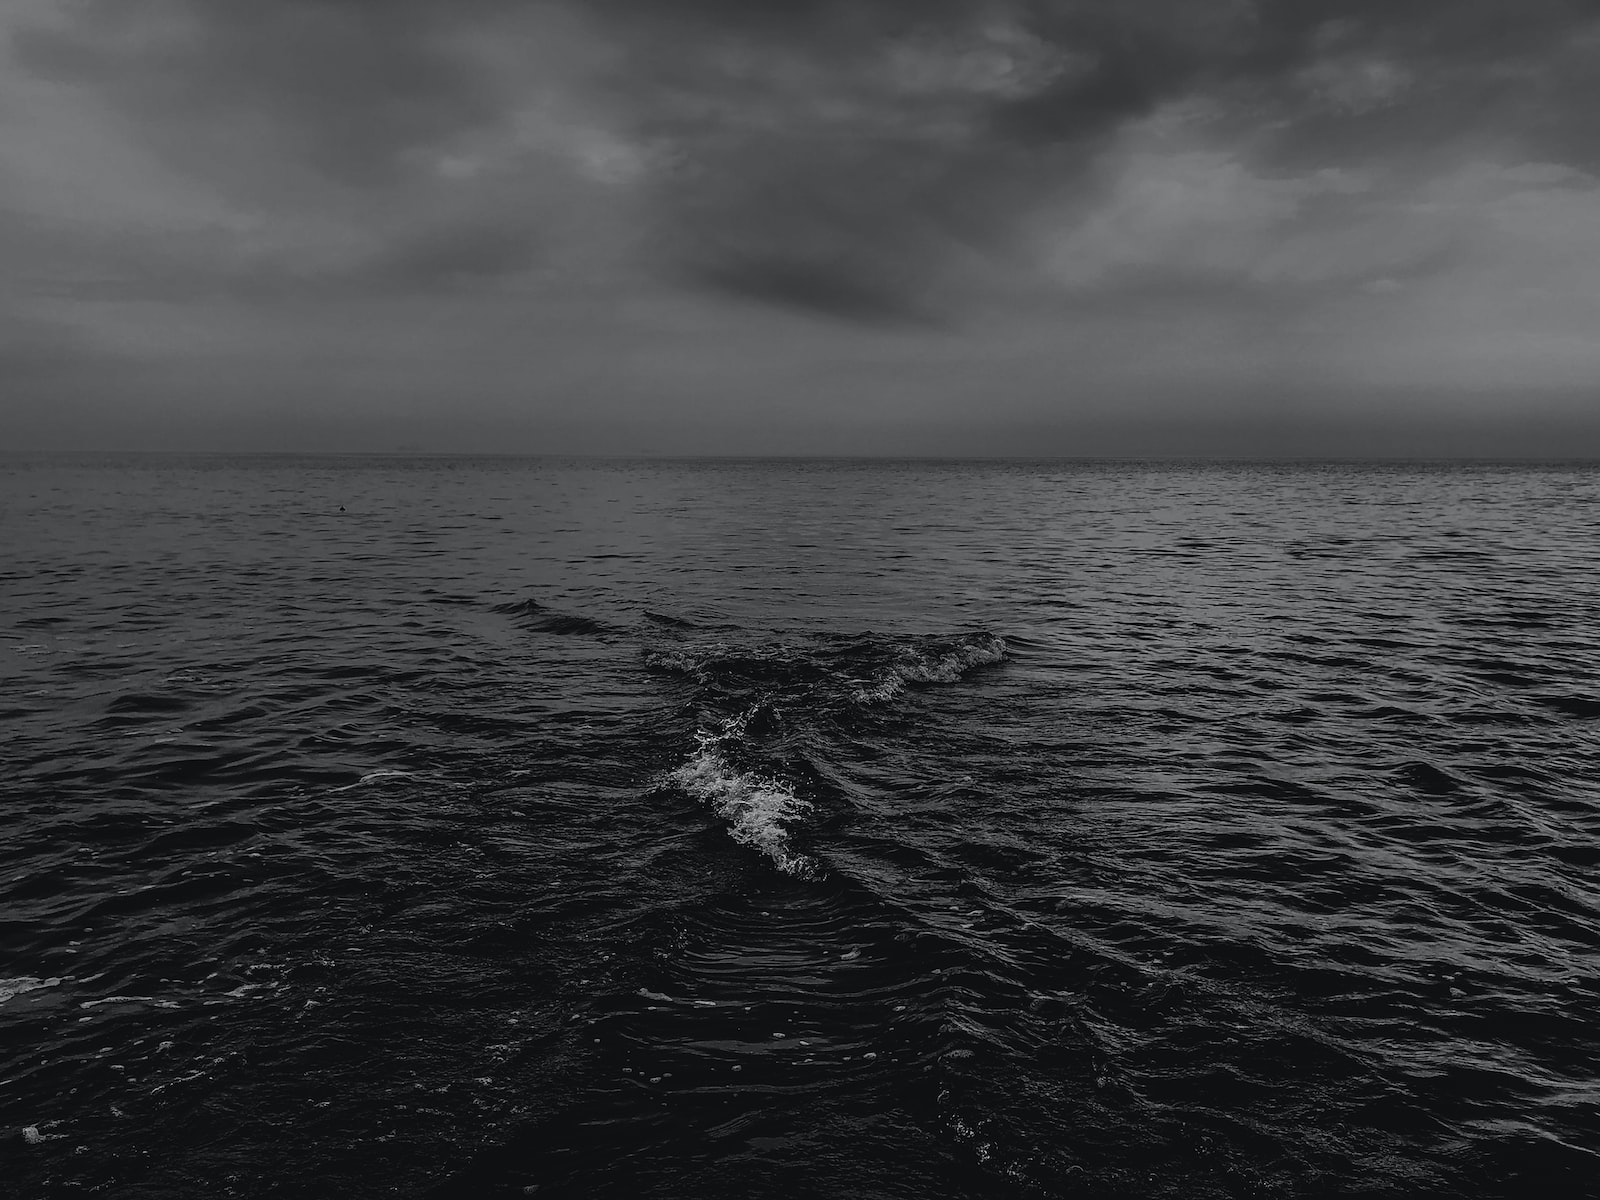 Navire Guerre Russe Mer Noire reponse Otan attaque Nucleaire Ukraine Plare